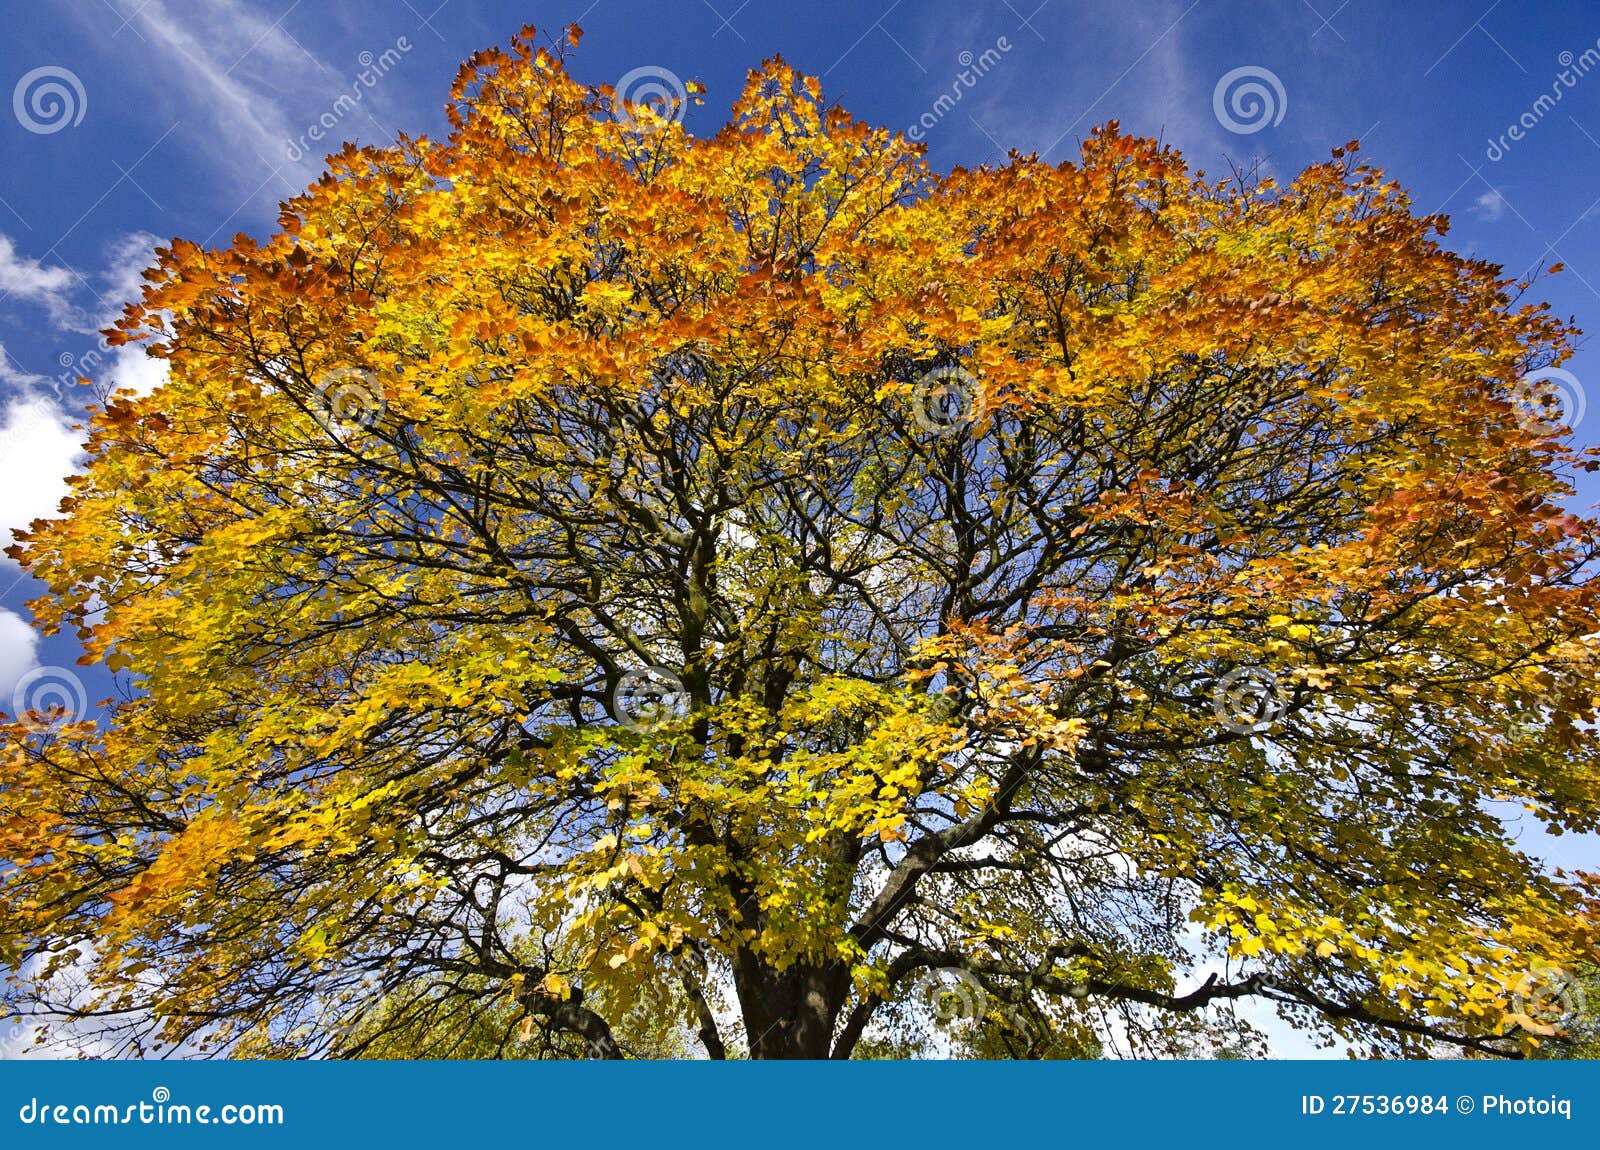 vivid autumn tree-top against a blue sky backround